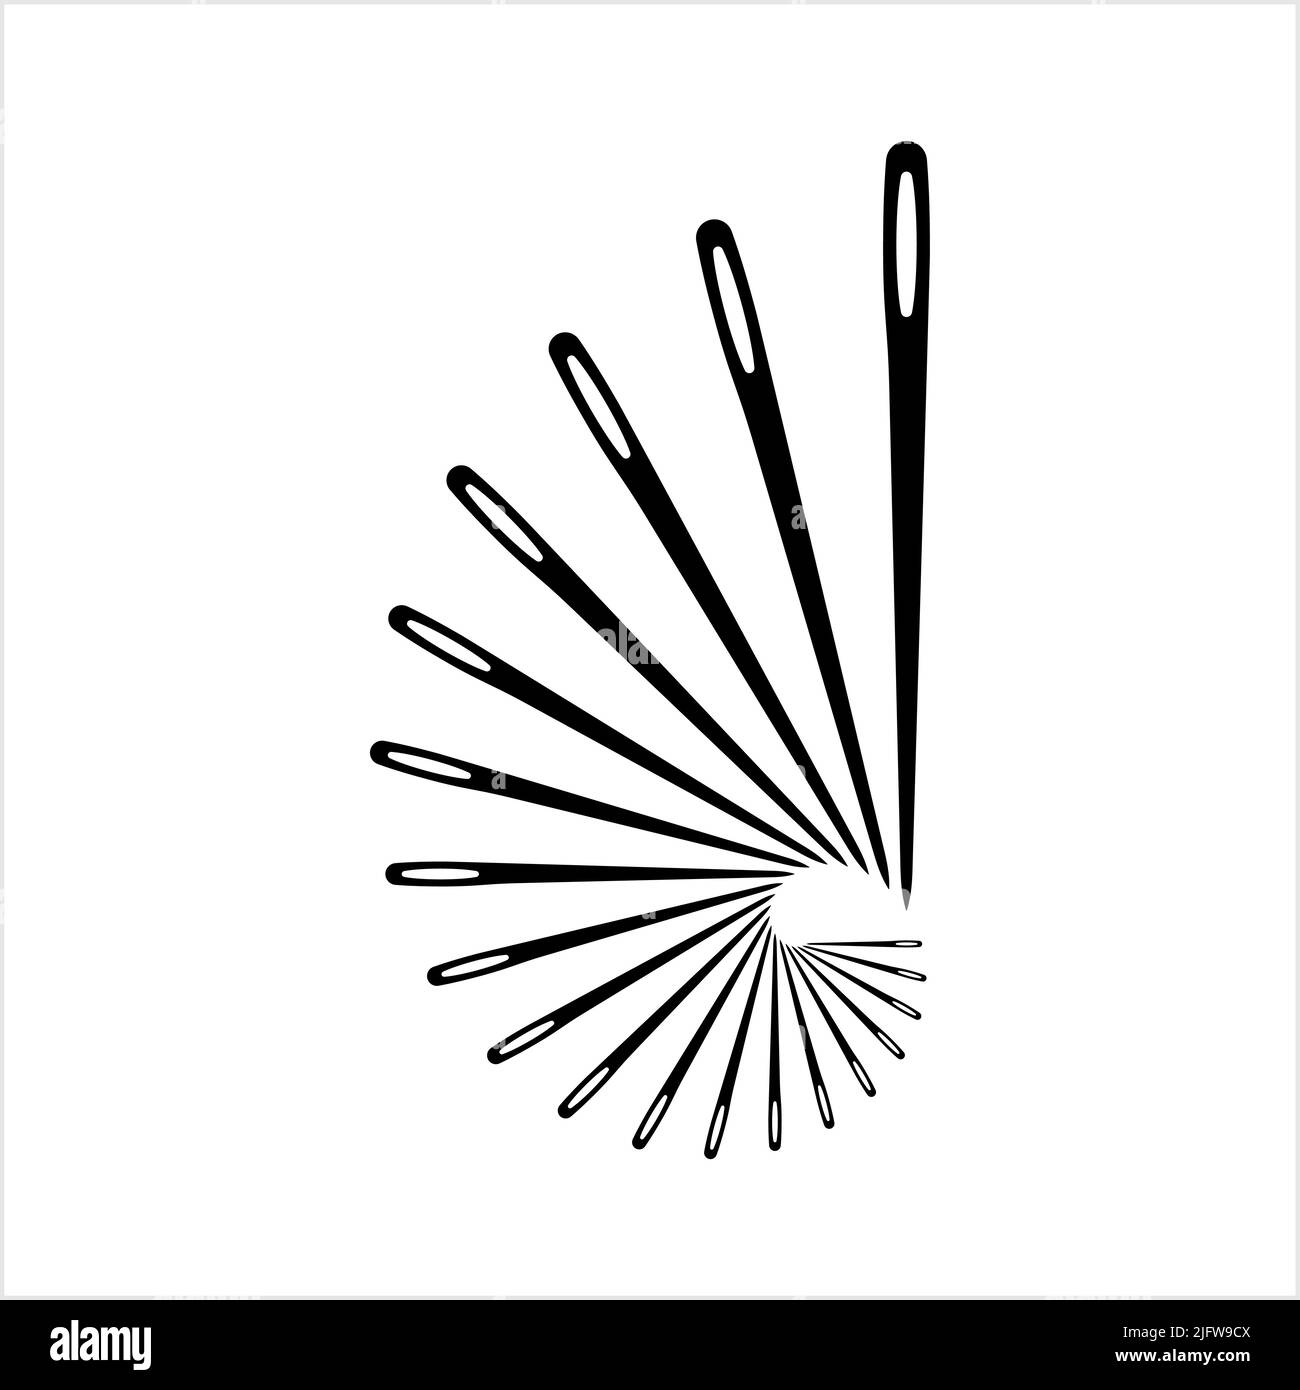 Sewing Needle Icon Vector Art Illustration Stock Vector Image & Art - Alamy